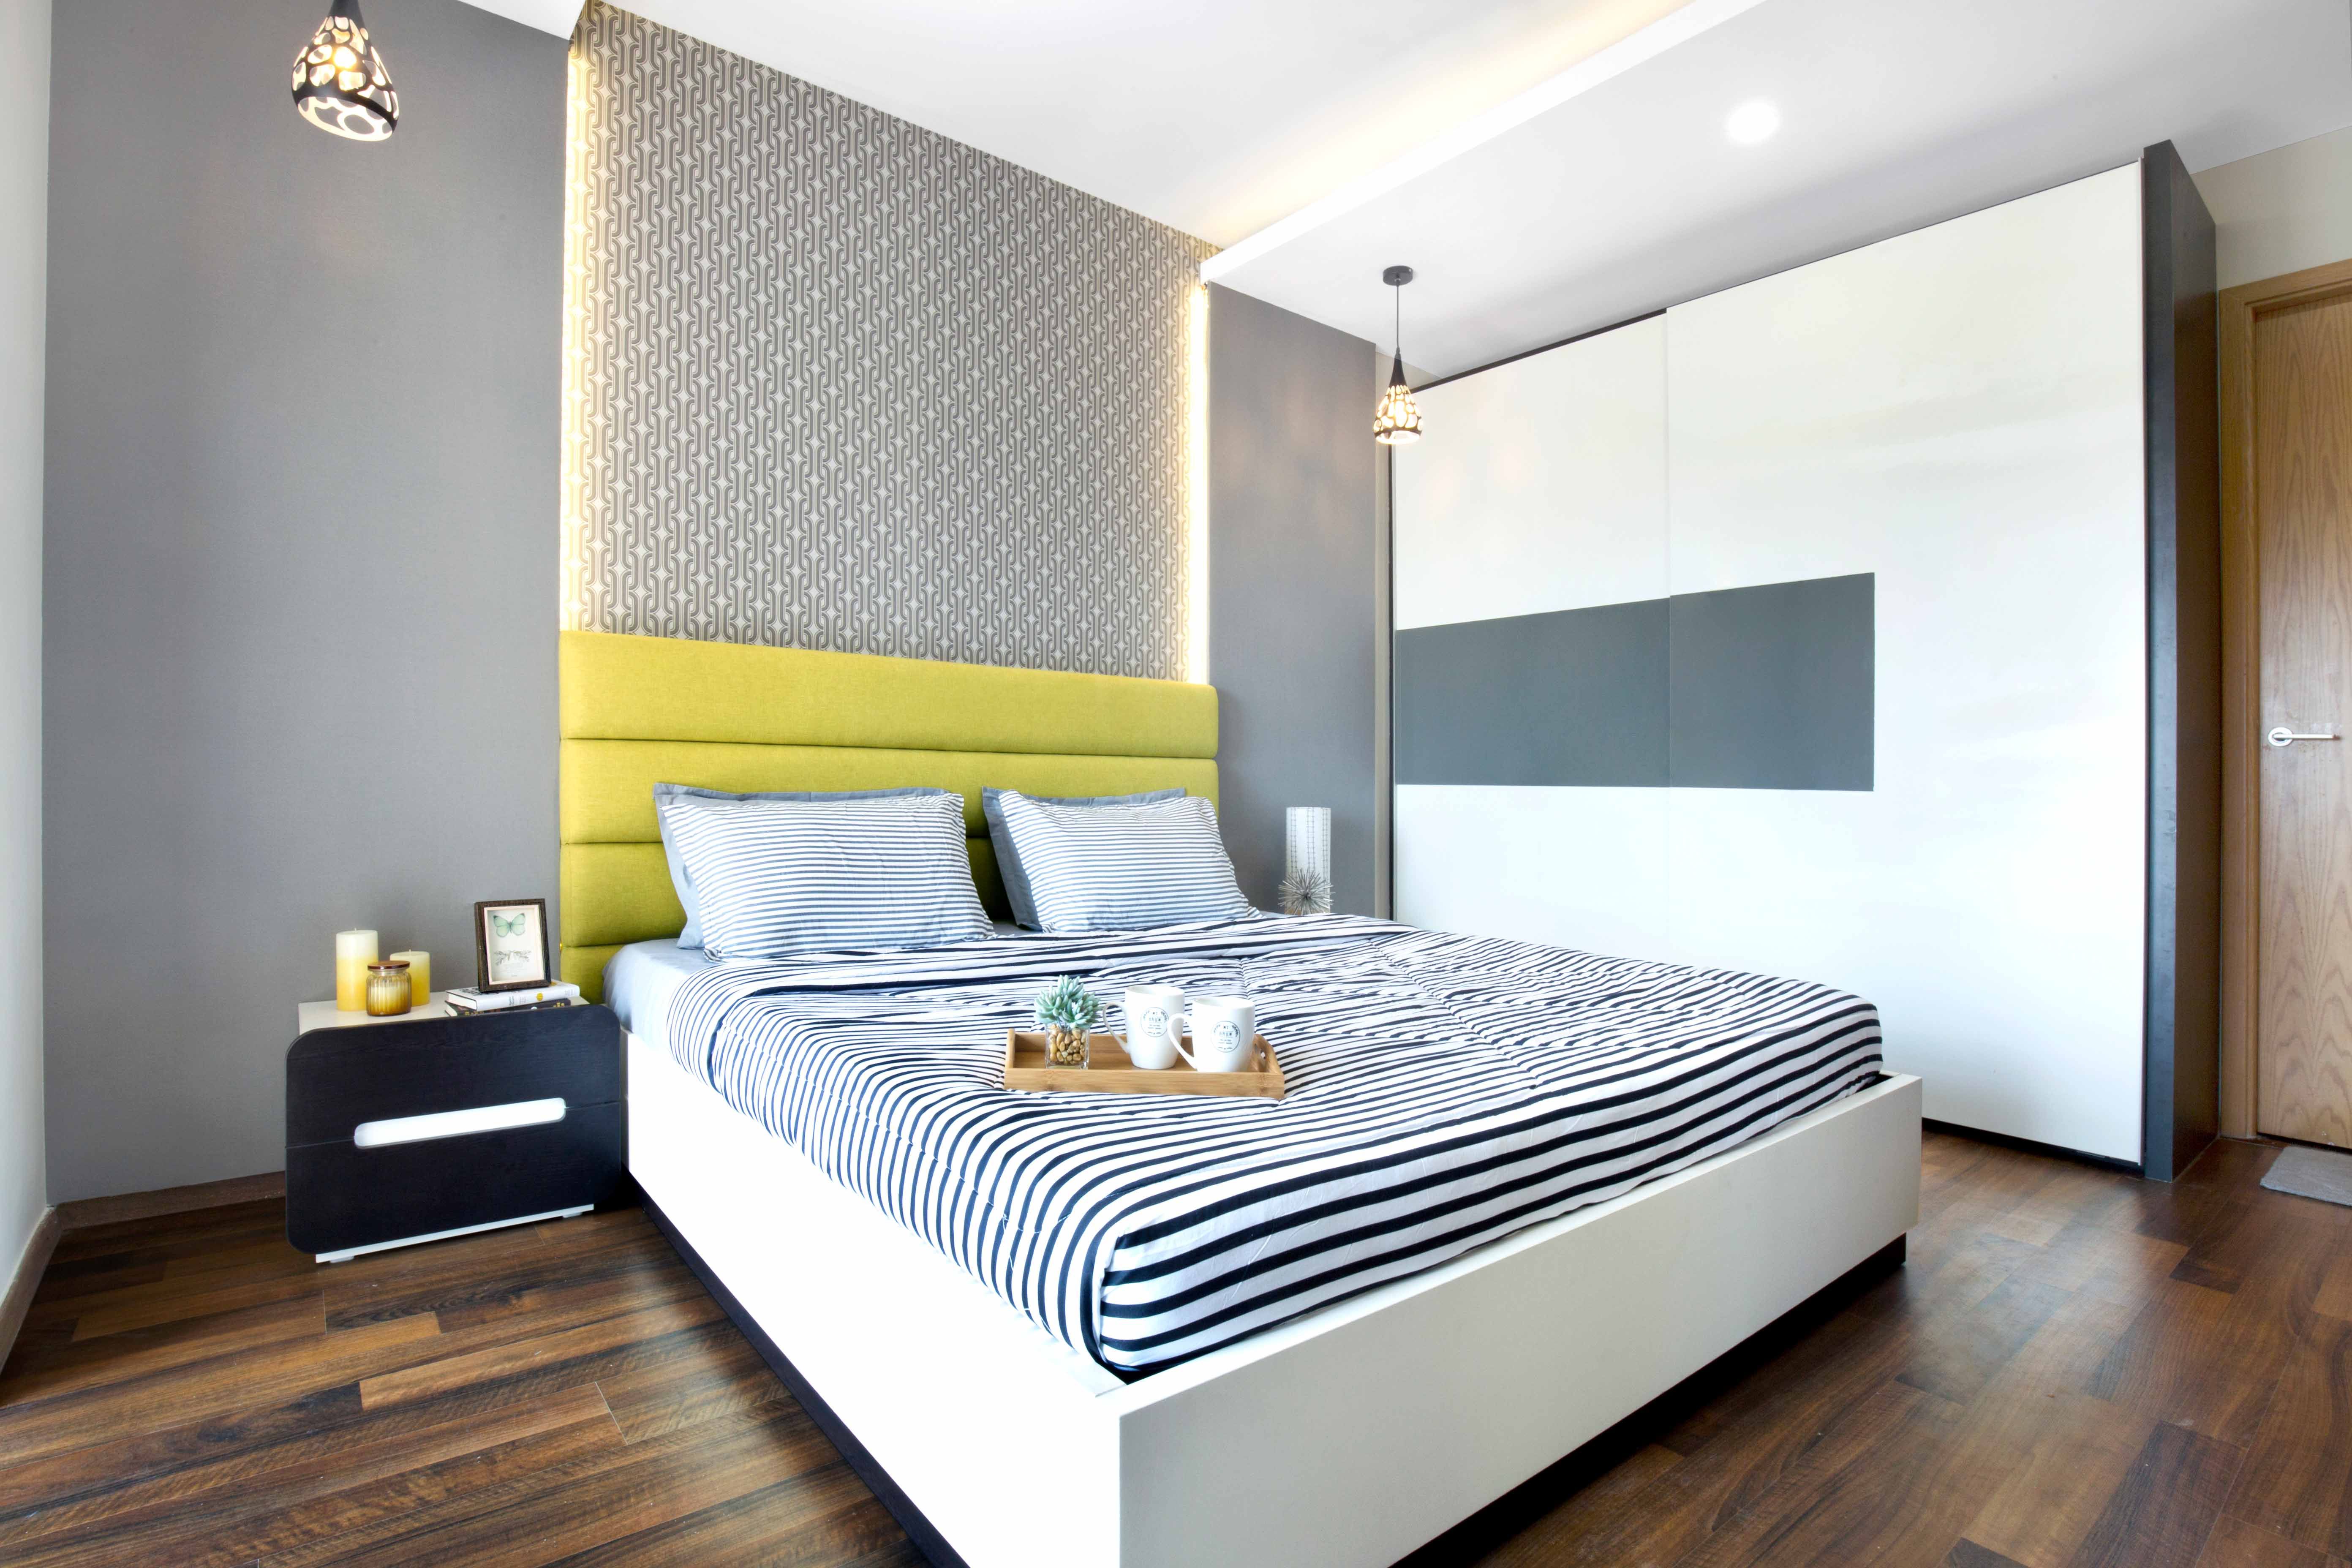 Modern Grey Master Bedroom Design With Yellow Headboard